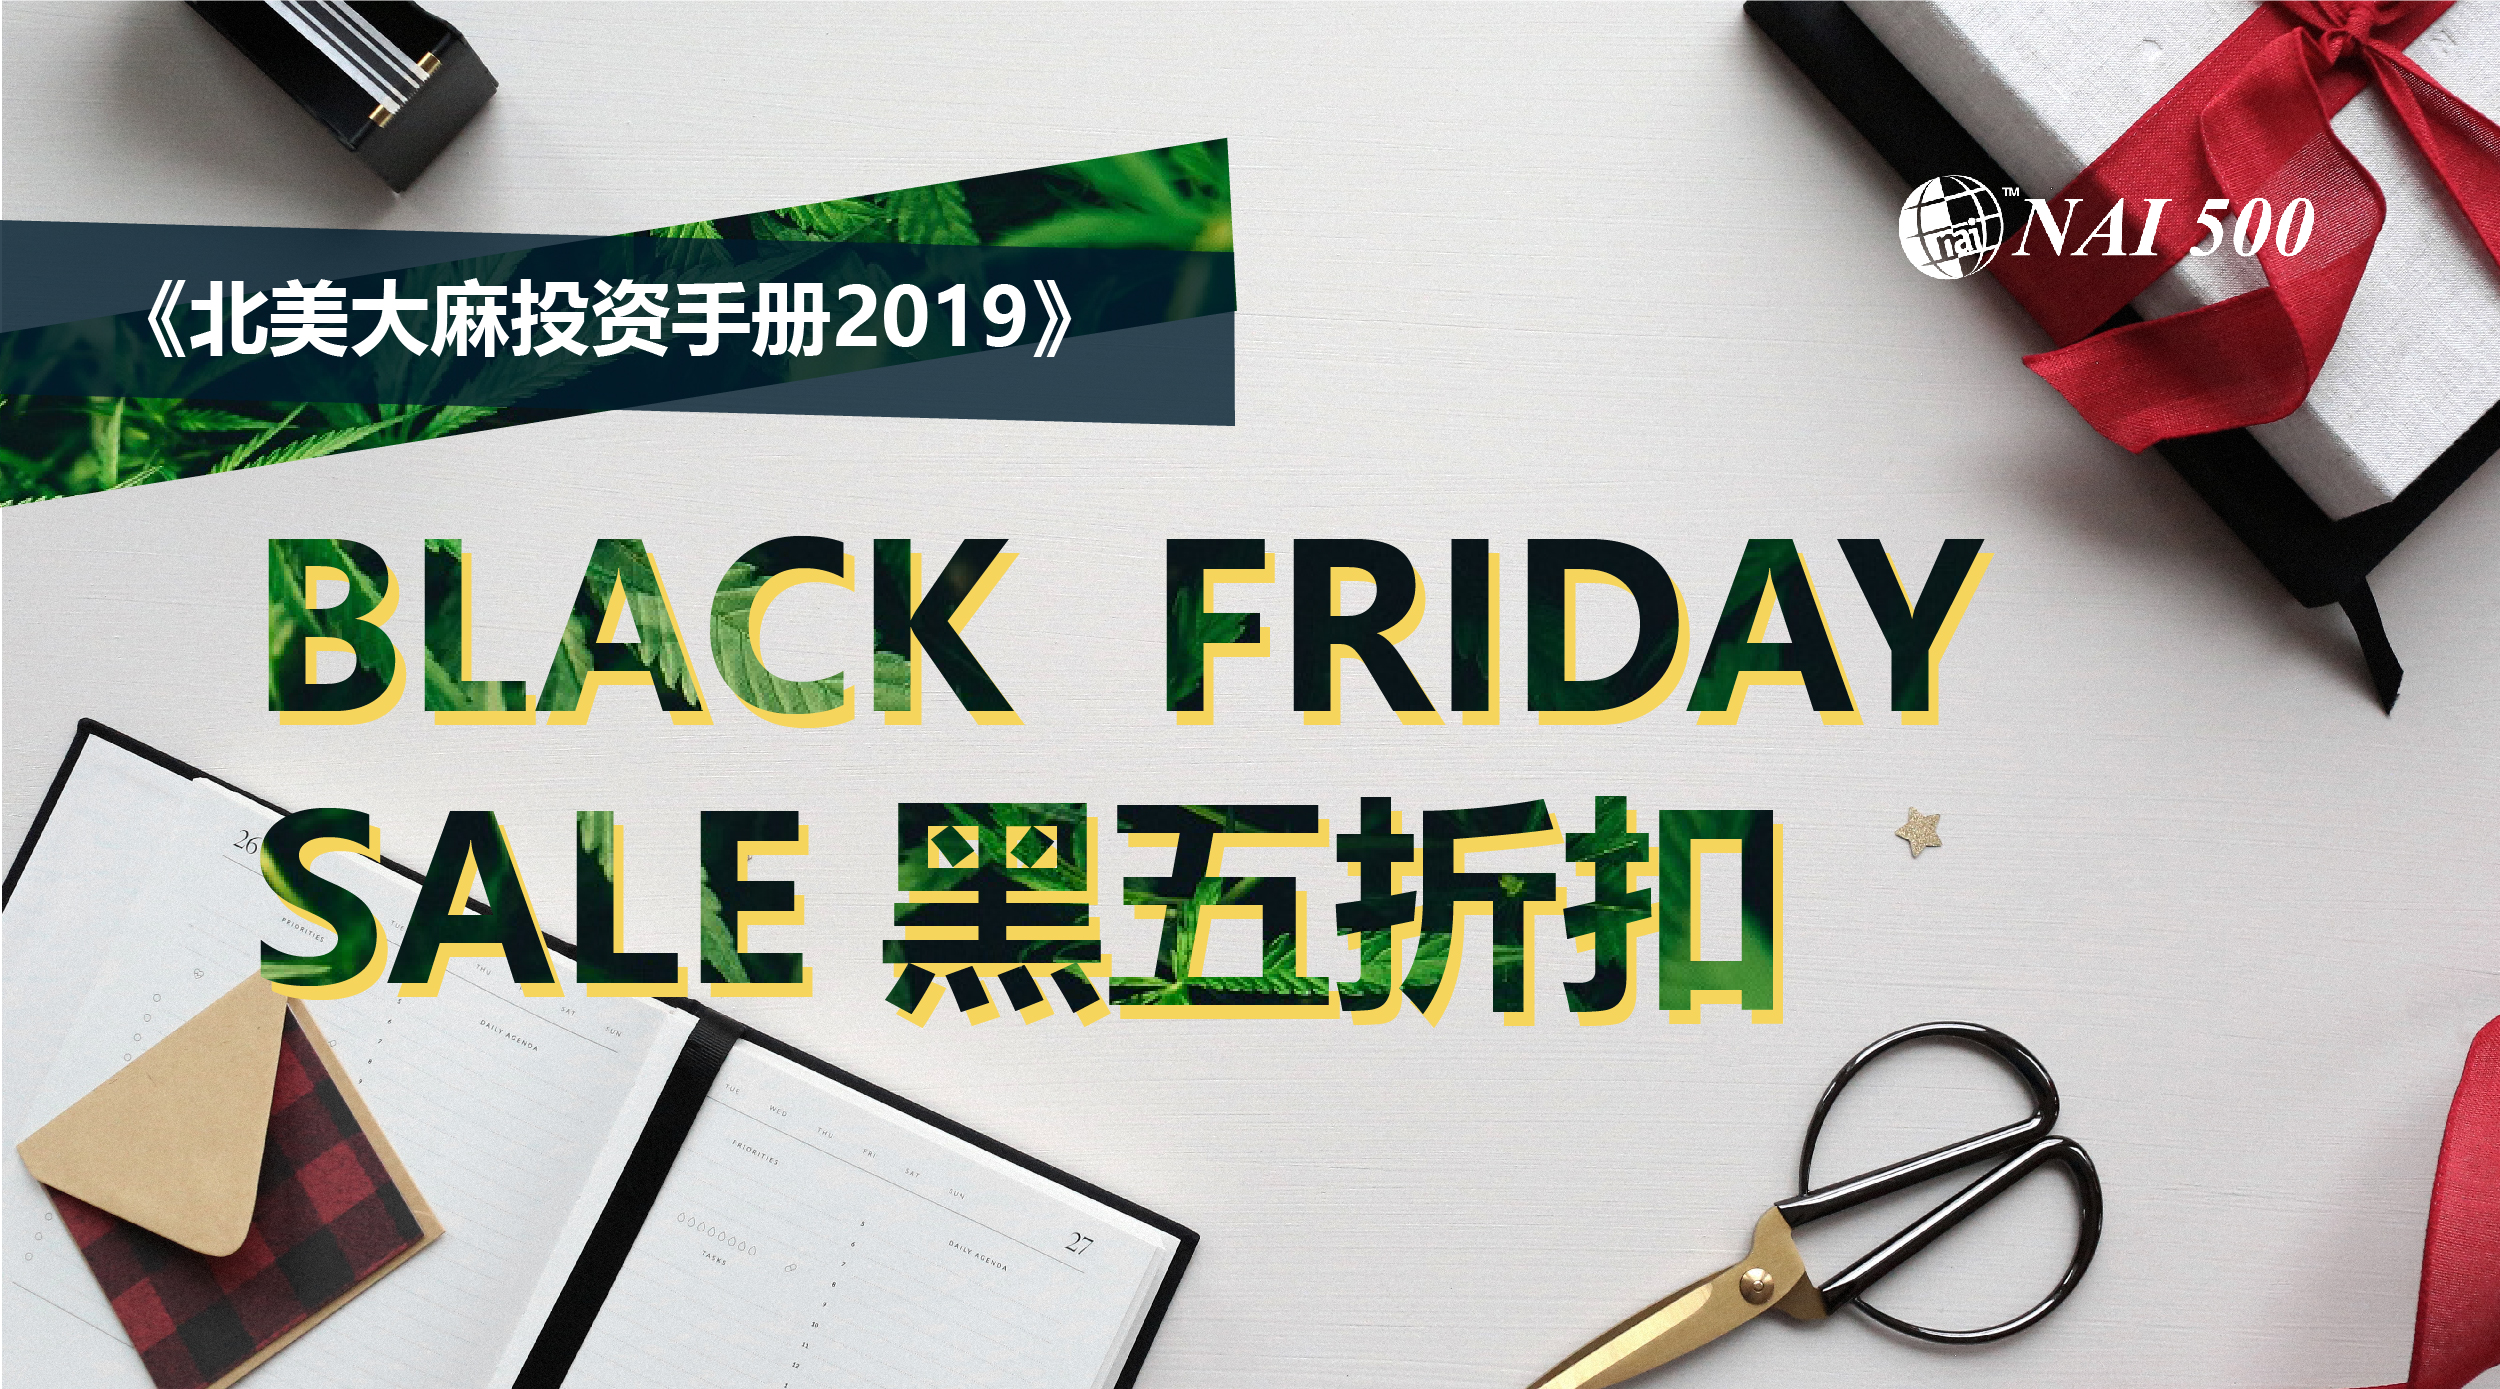 Black Friday Sale - Cannabis Book 2019_WeChat Cover Sch